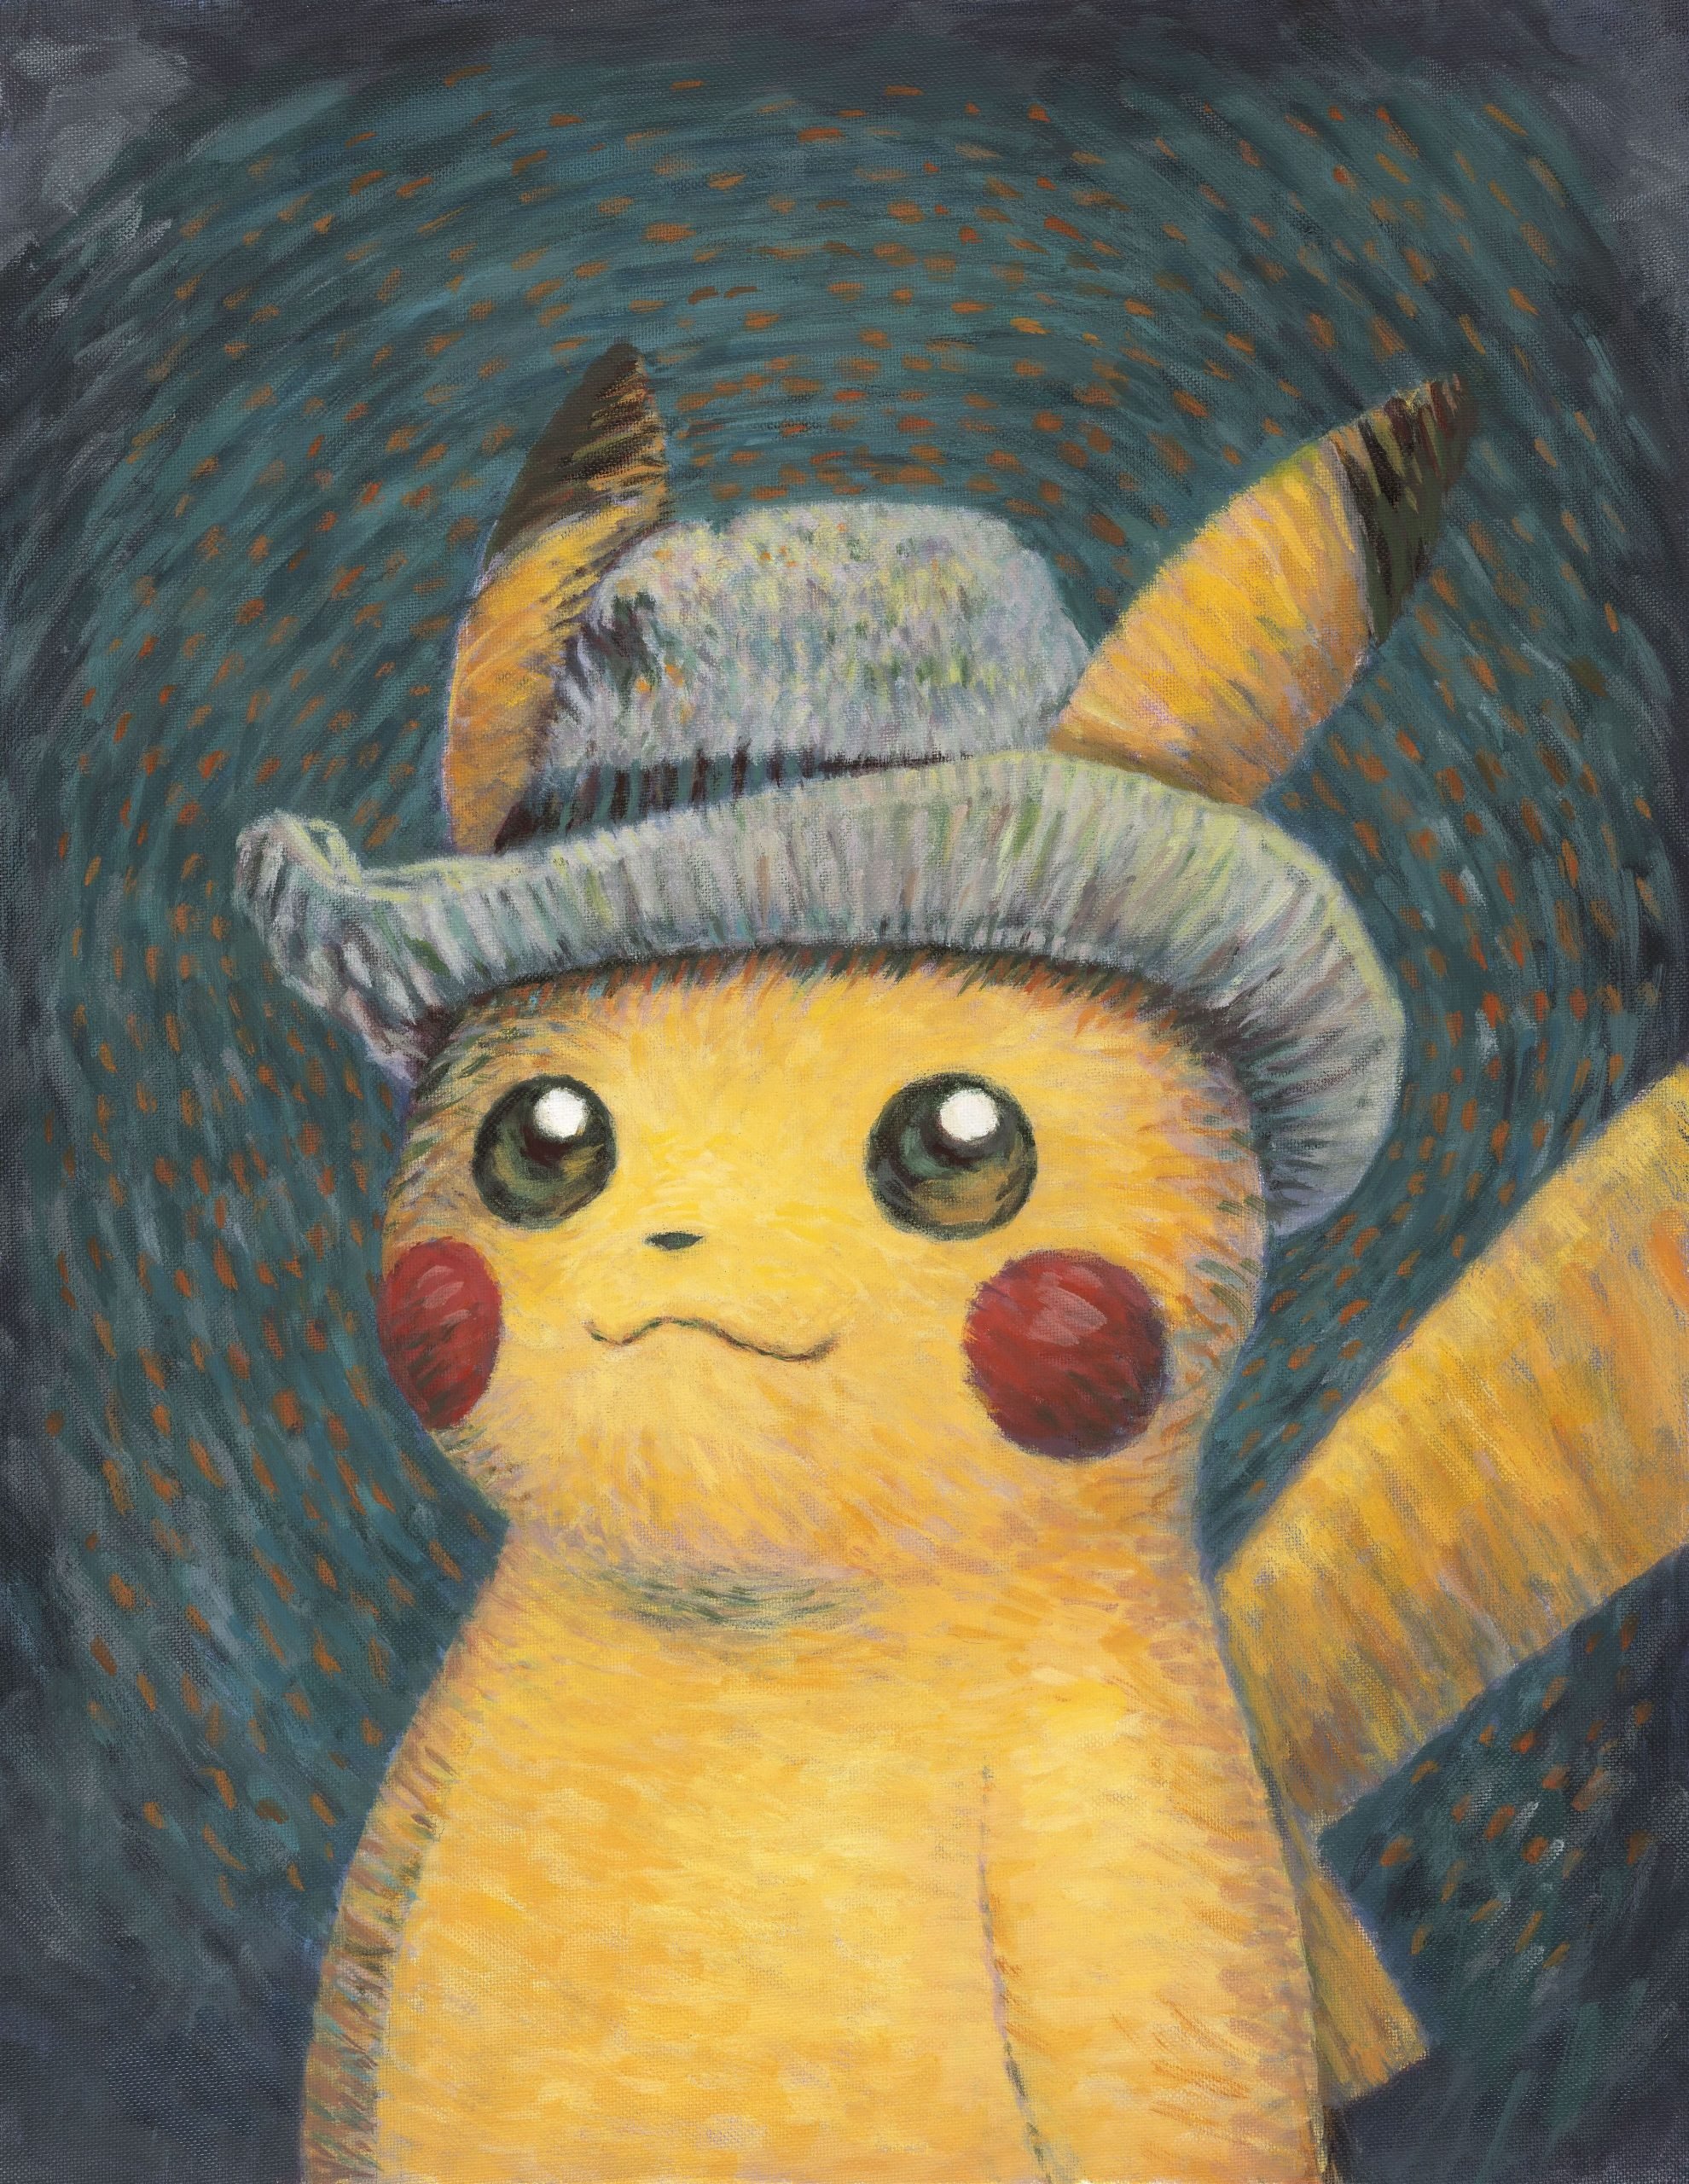 Pokémon at the Van Gogh Museum - Van Gogh Museum, imagens de pokémon